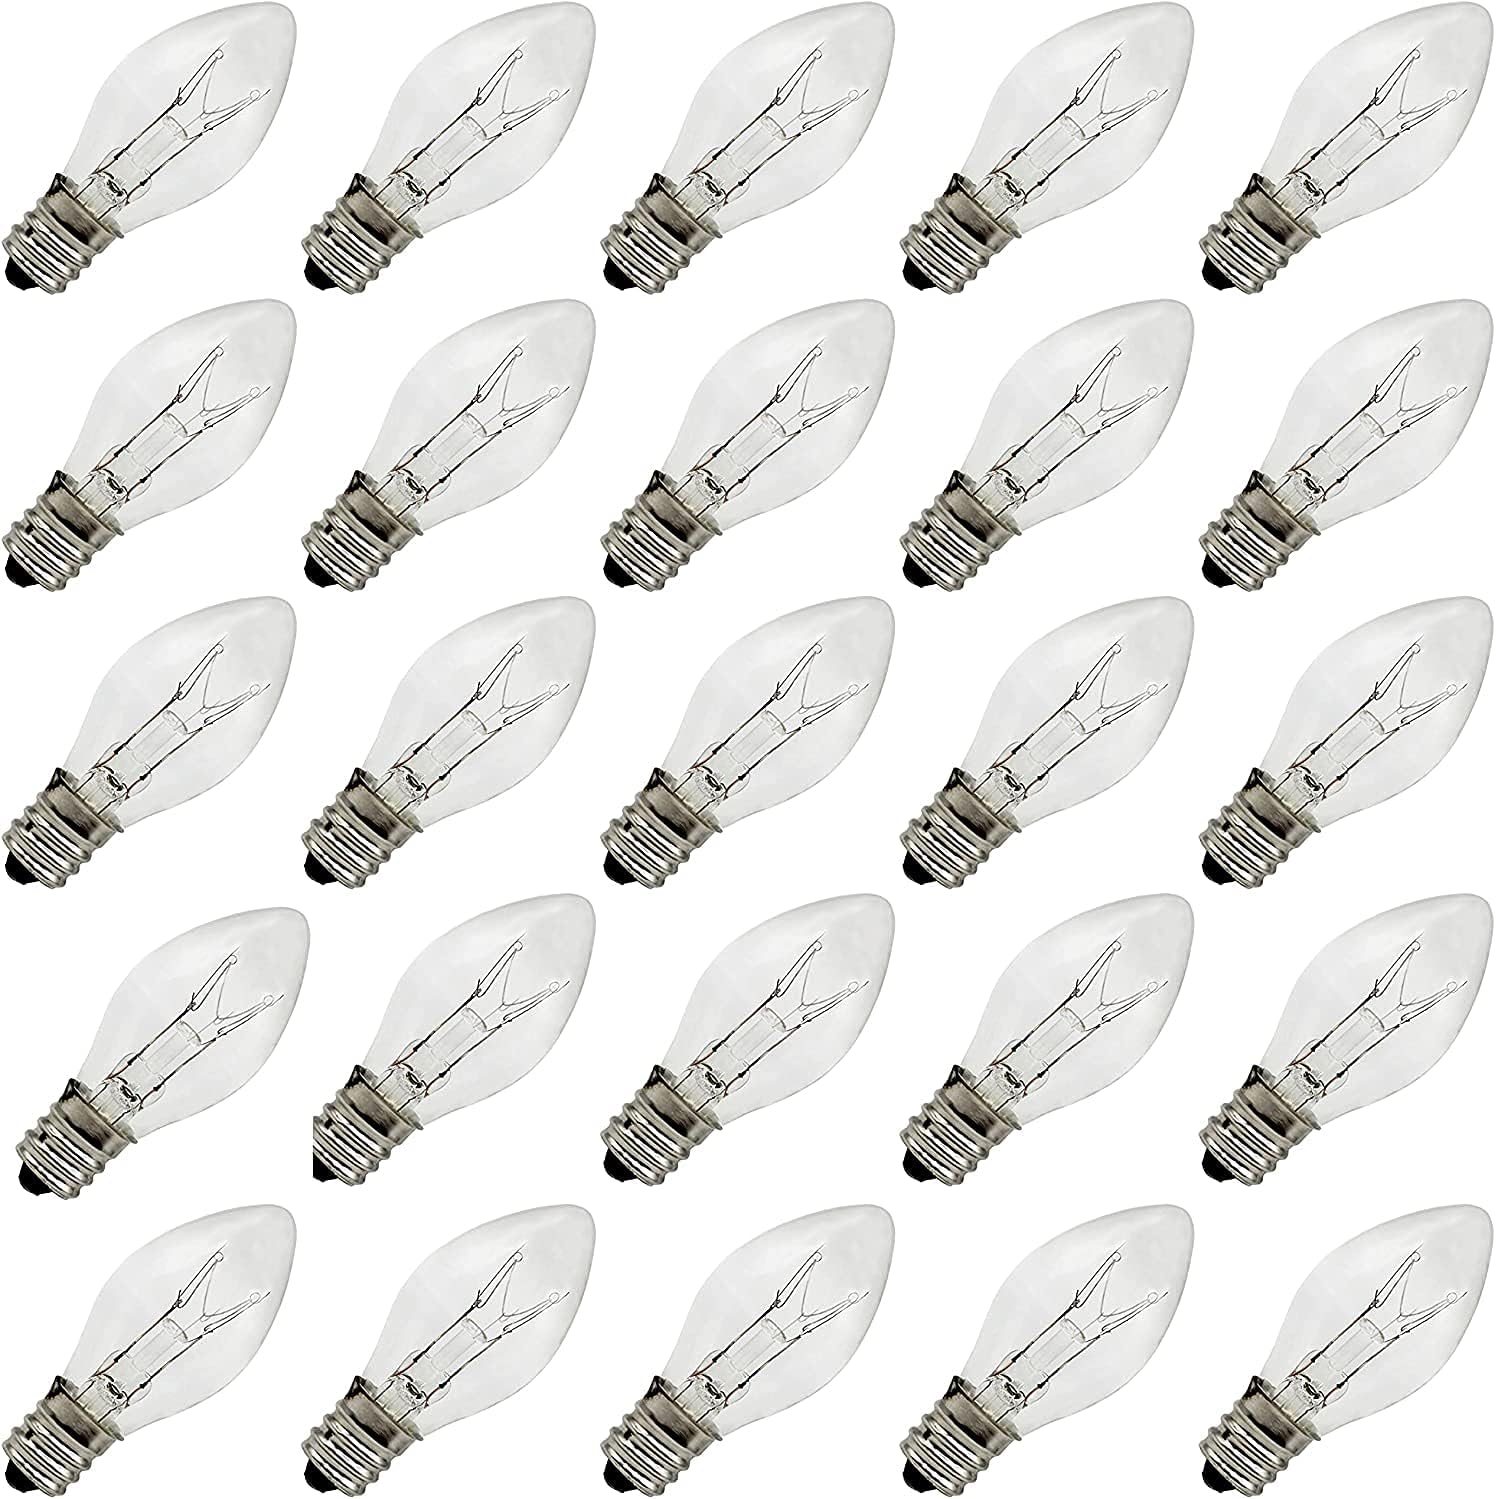 Creative Hobbies 25 Pack Night Light Bulbs